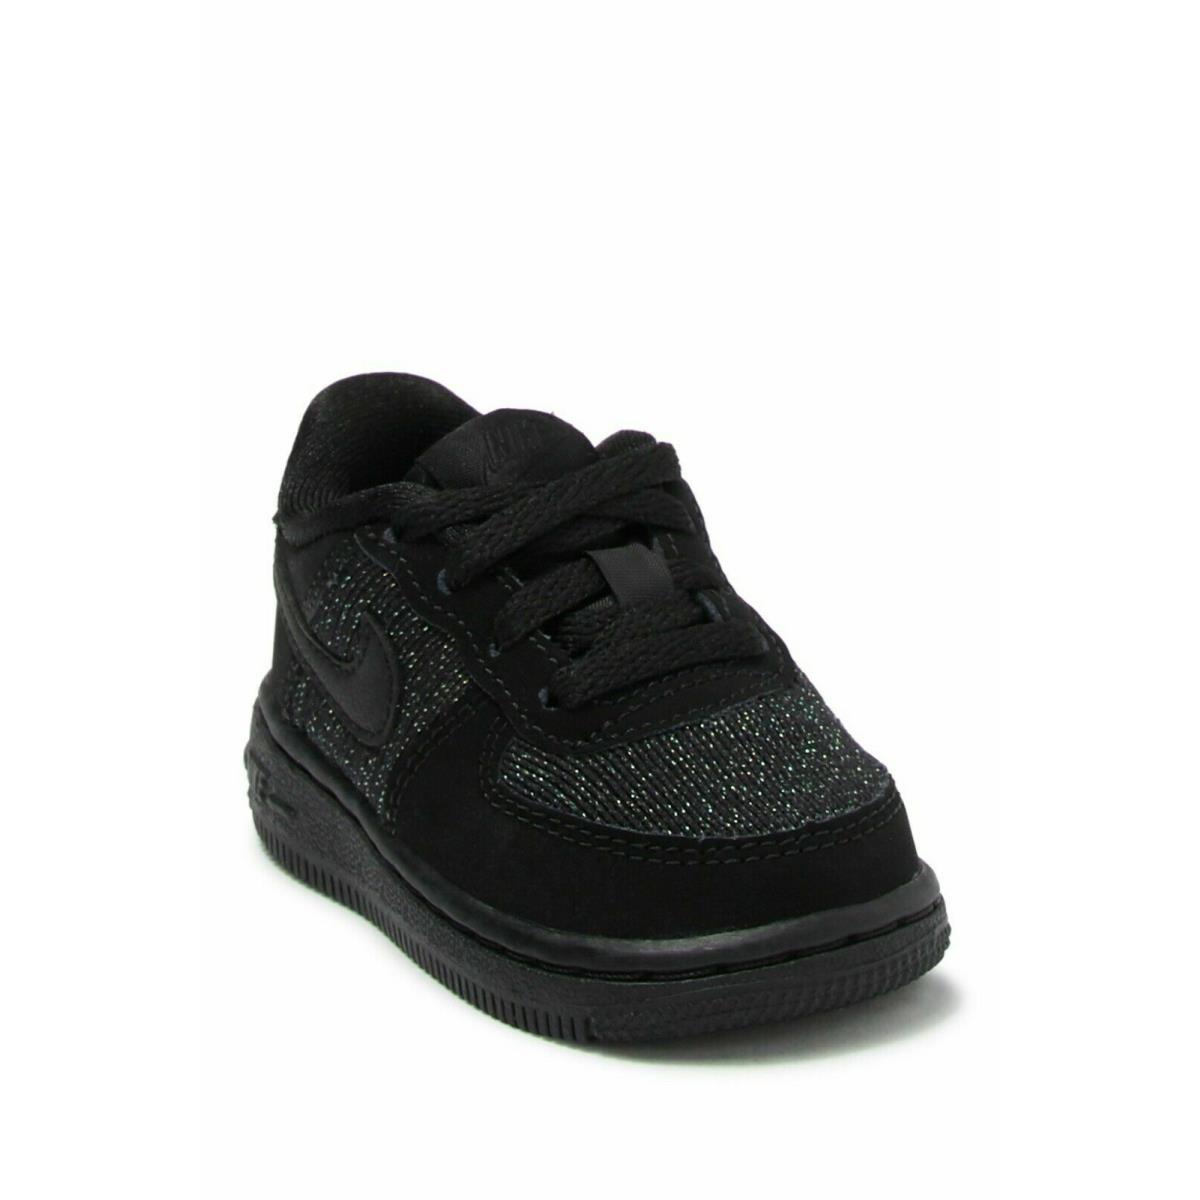 Nike Toddler Air Force 1 LV8 Sneakers Black AH7530 002